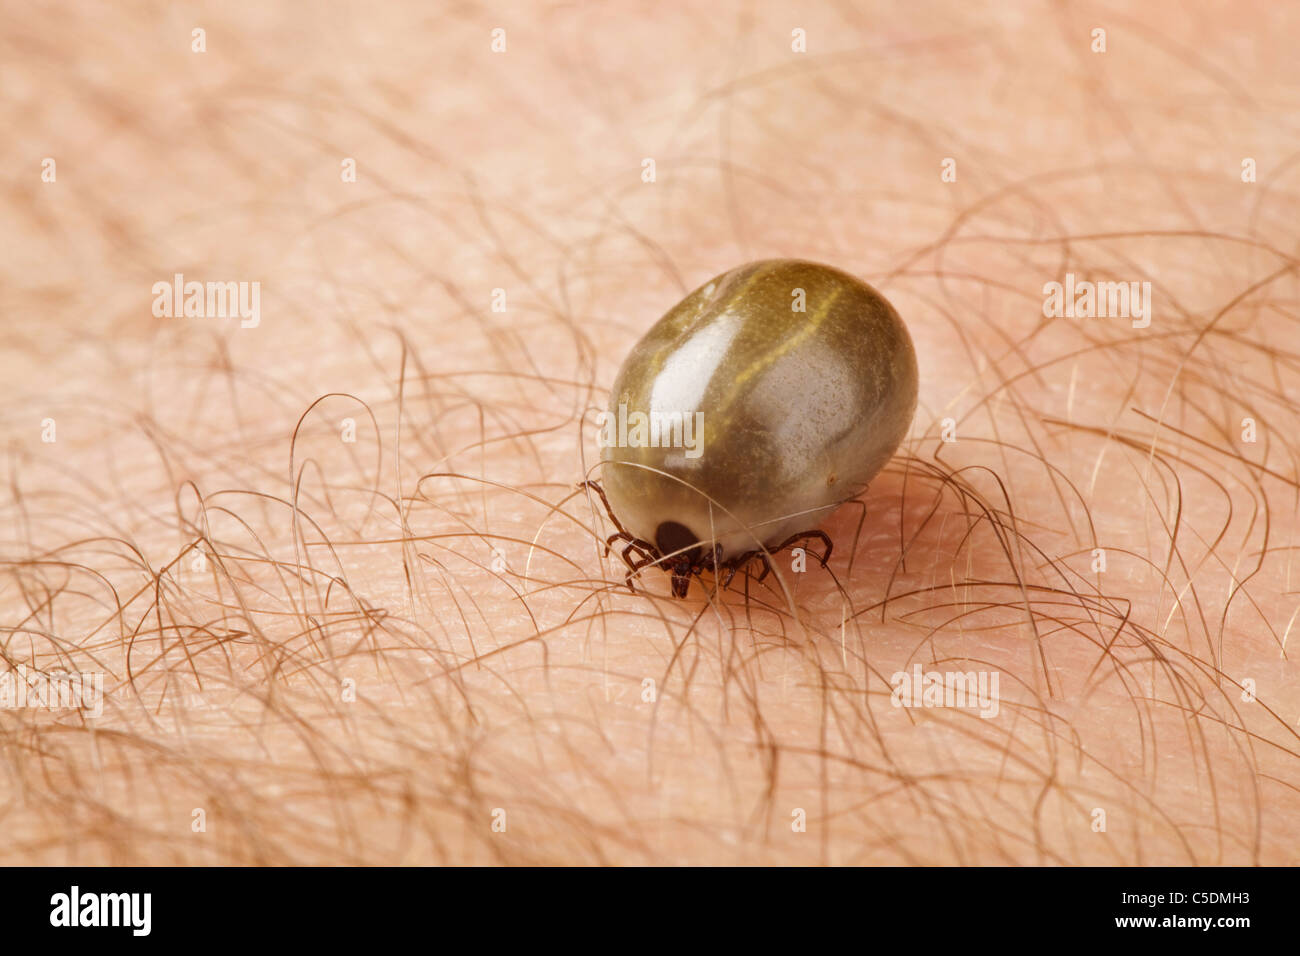 Single well-fed tick on human skin Stock Photo